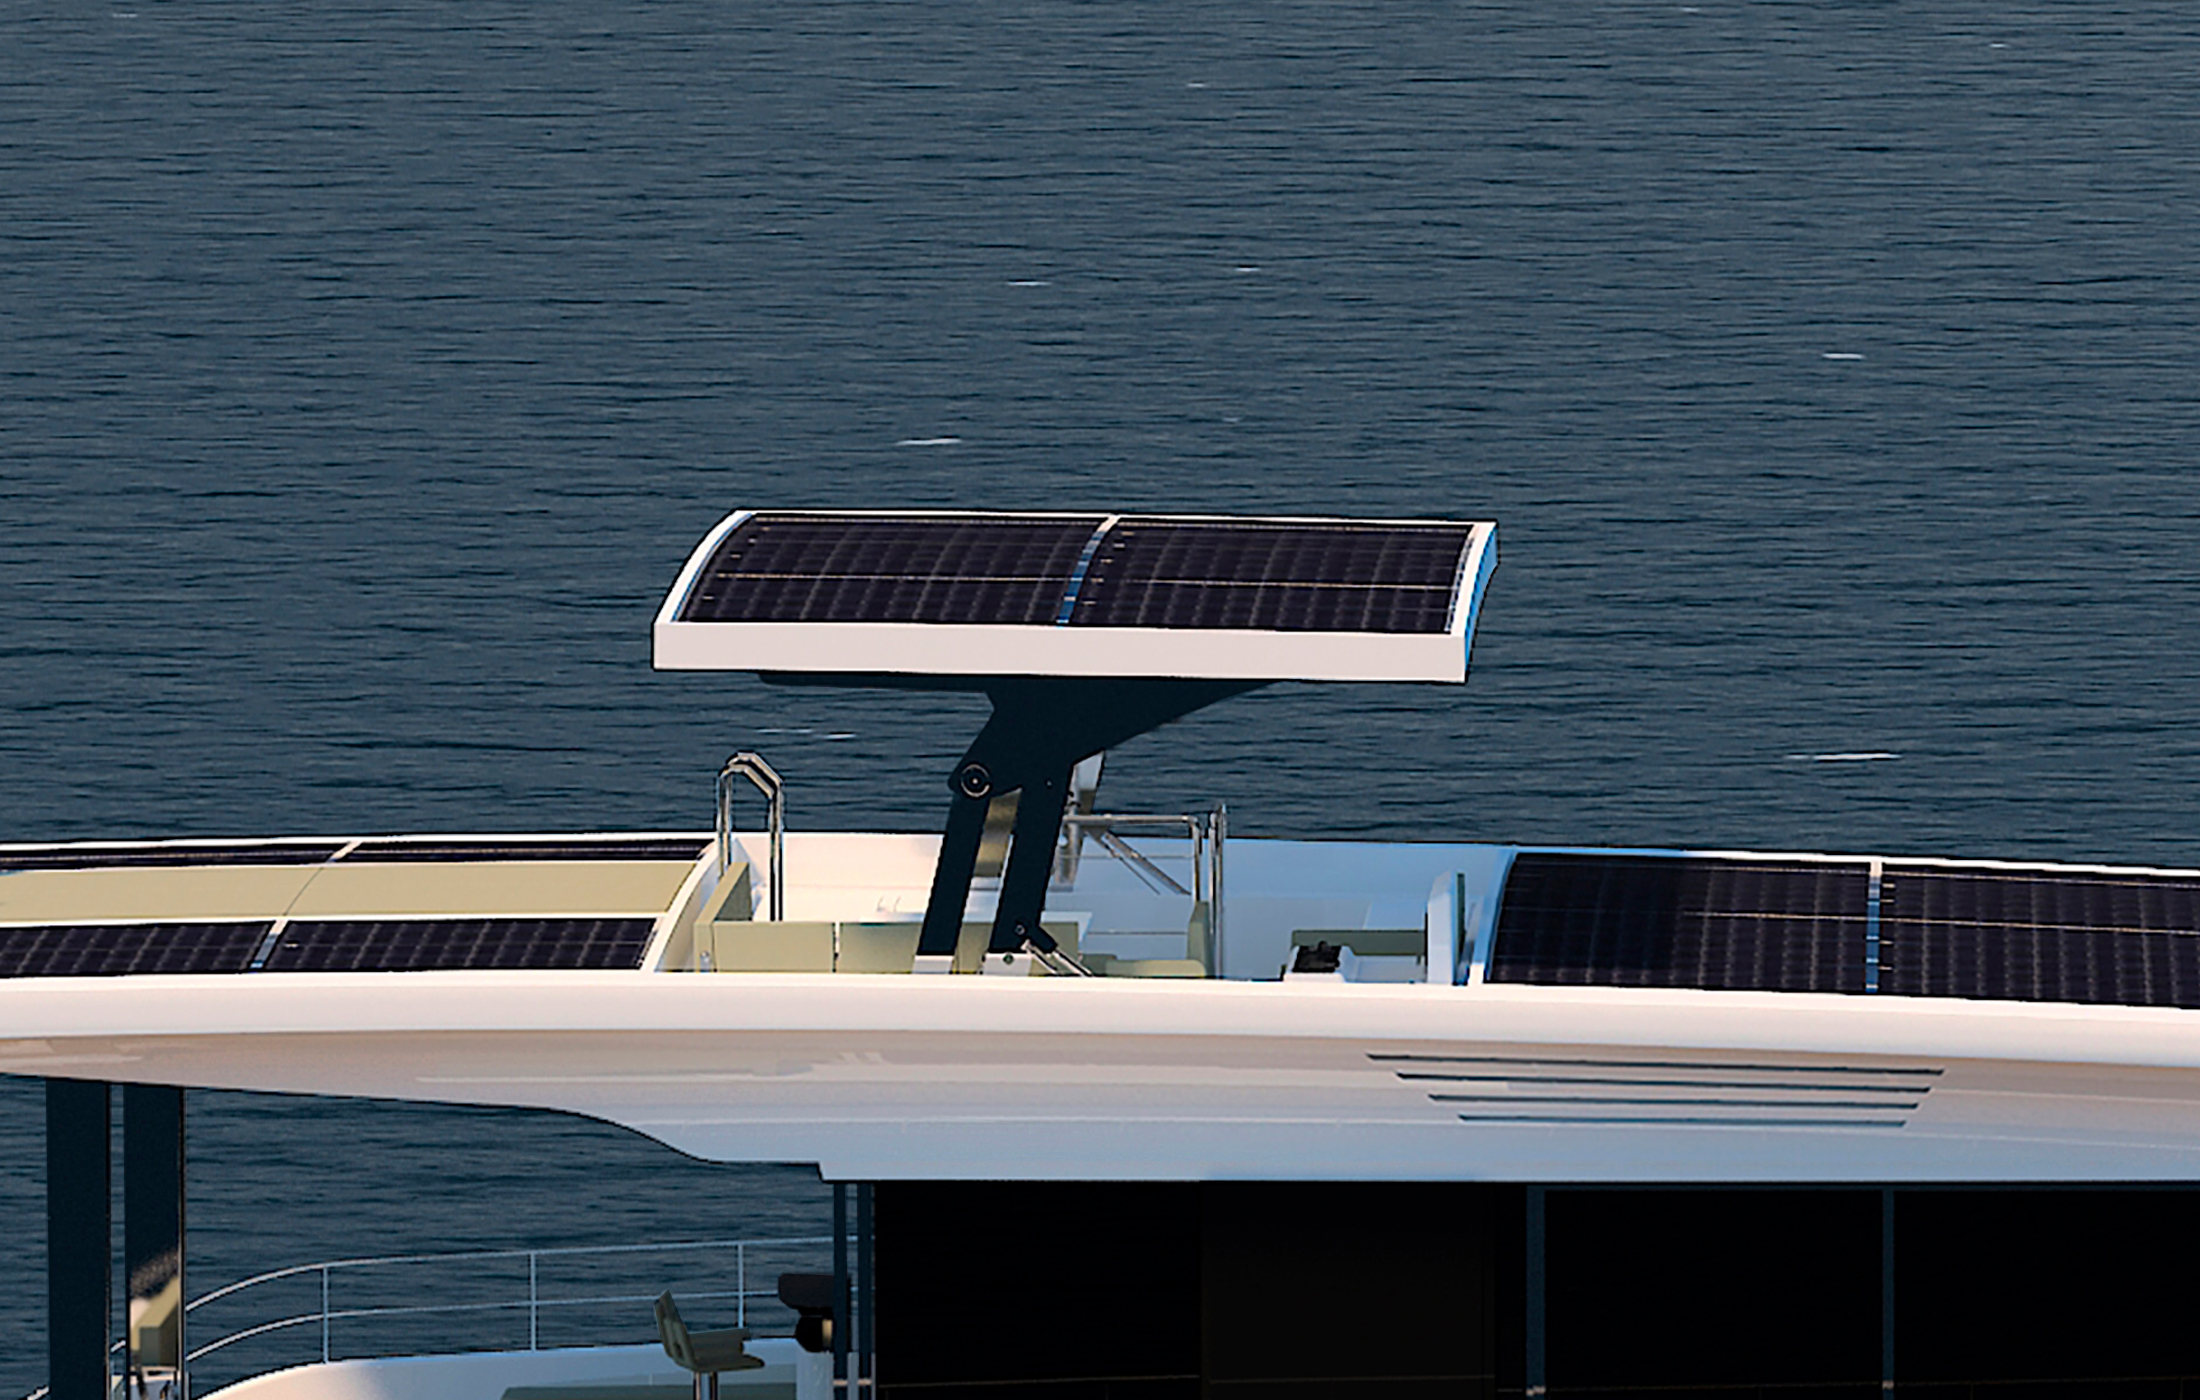 Solar panels on the flybridge of a yacht